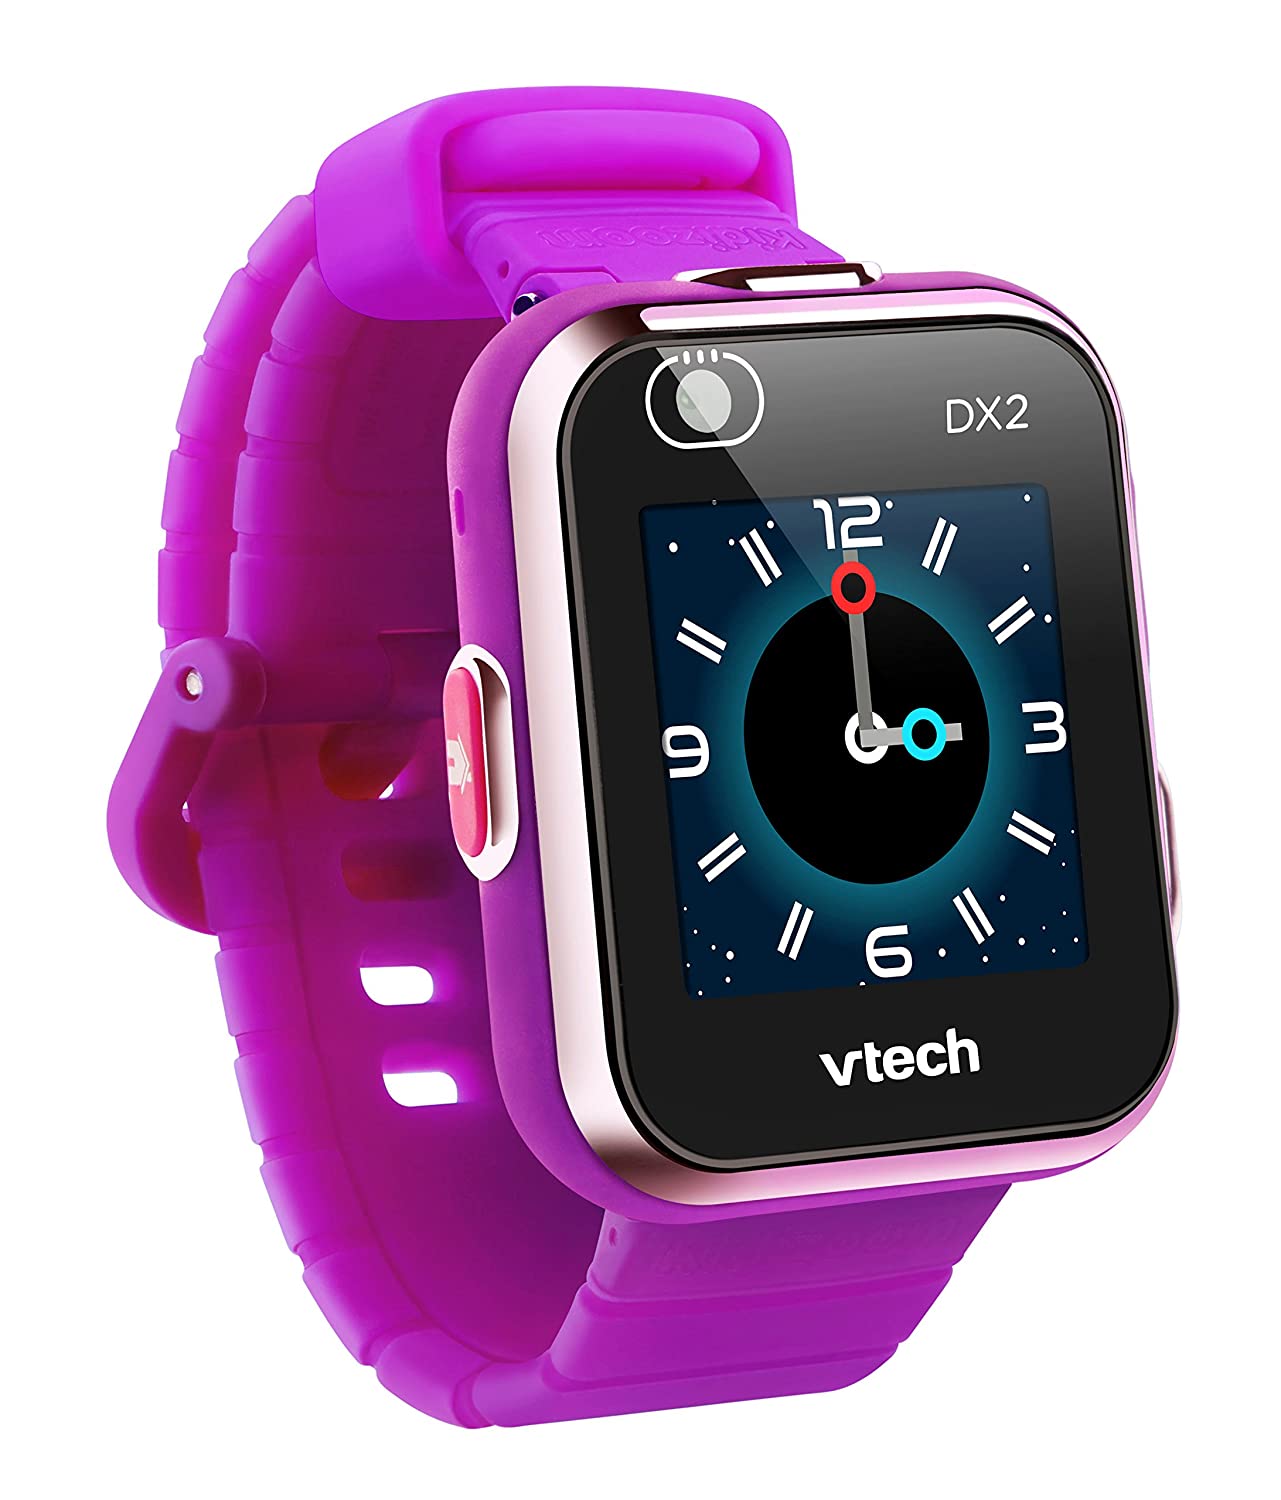 VTech Kidizoom Smartwatch for Kids DX2 Purple